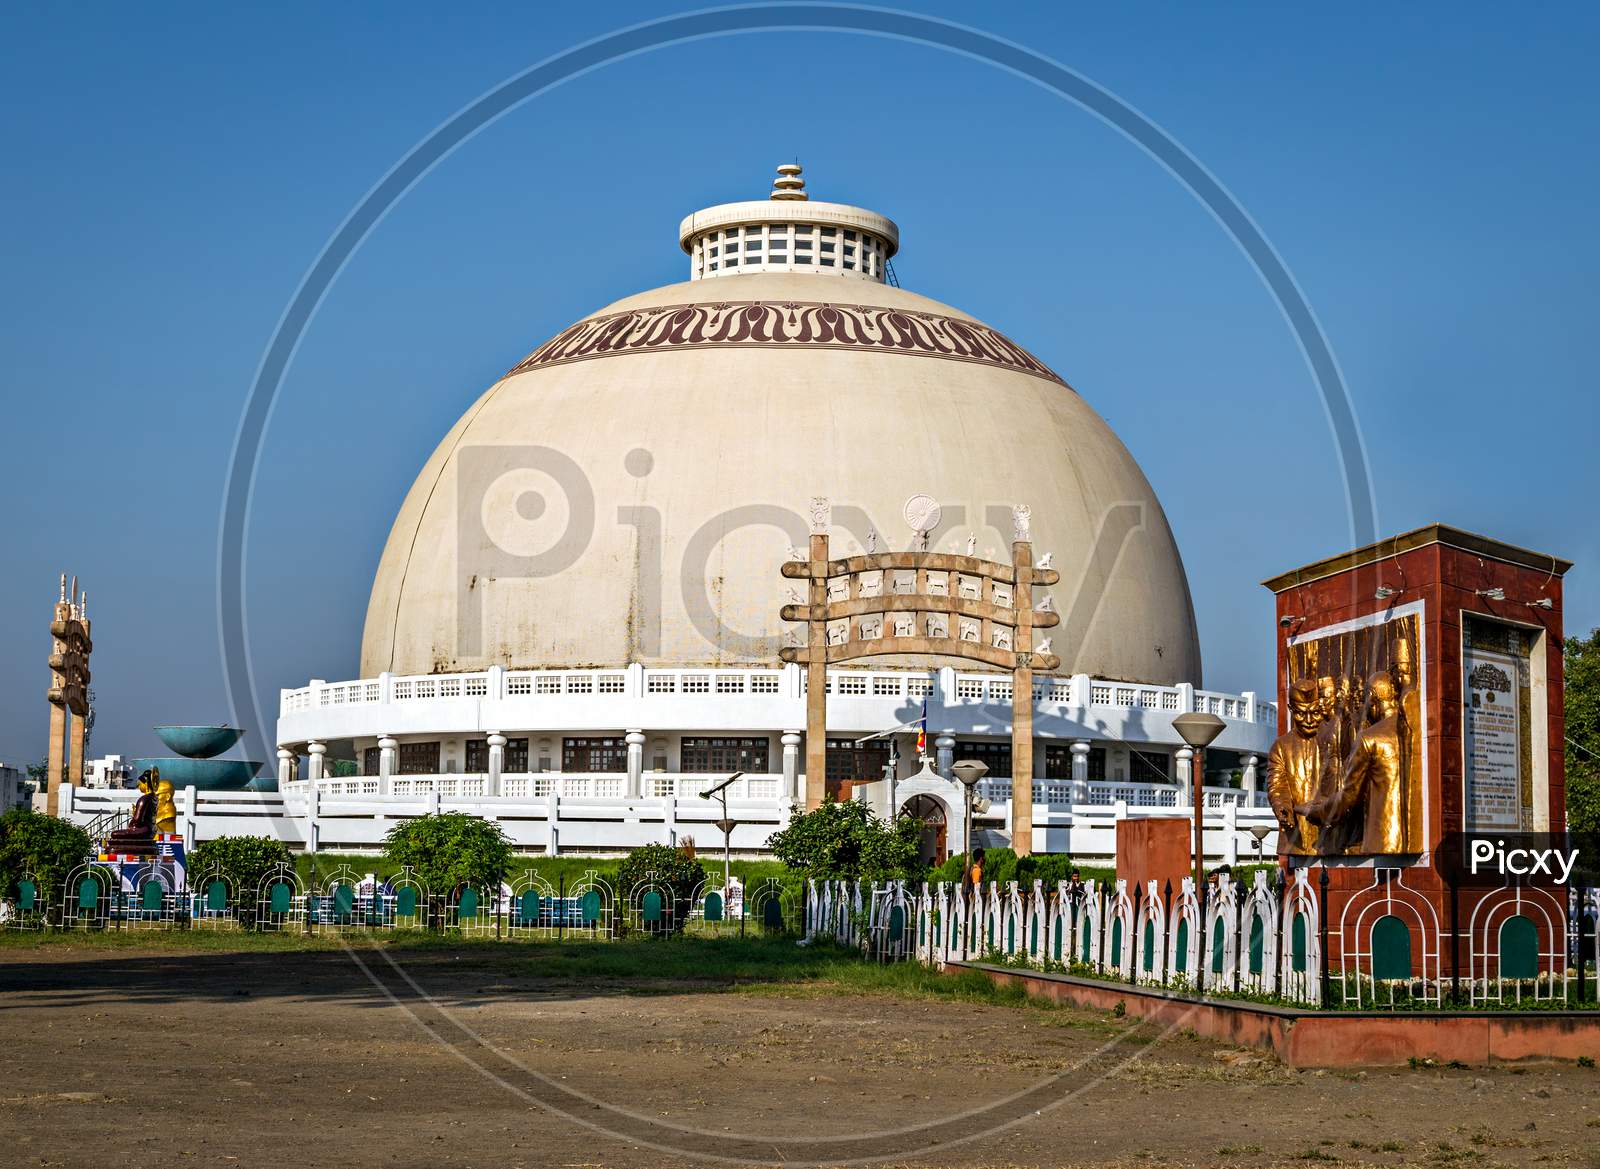 Deekshabhoomi dome in Nagpur, India.